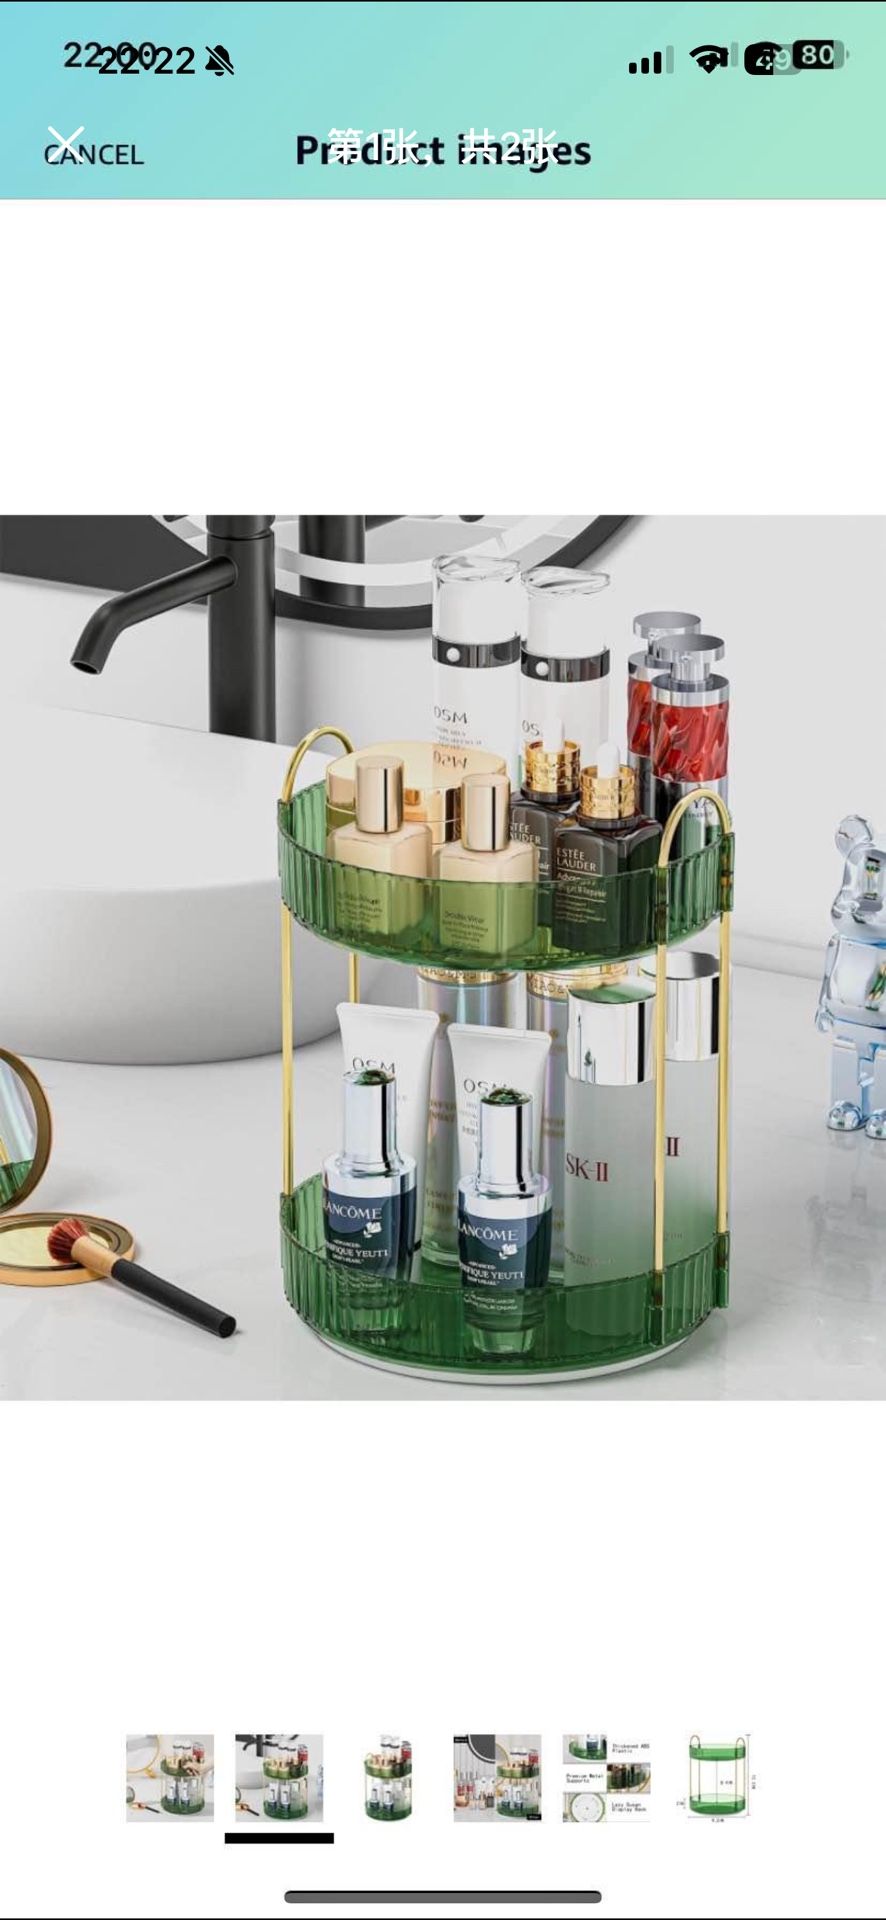 Makeup Organizer, 360° Rotating Design Bathroom Counter Organizer